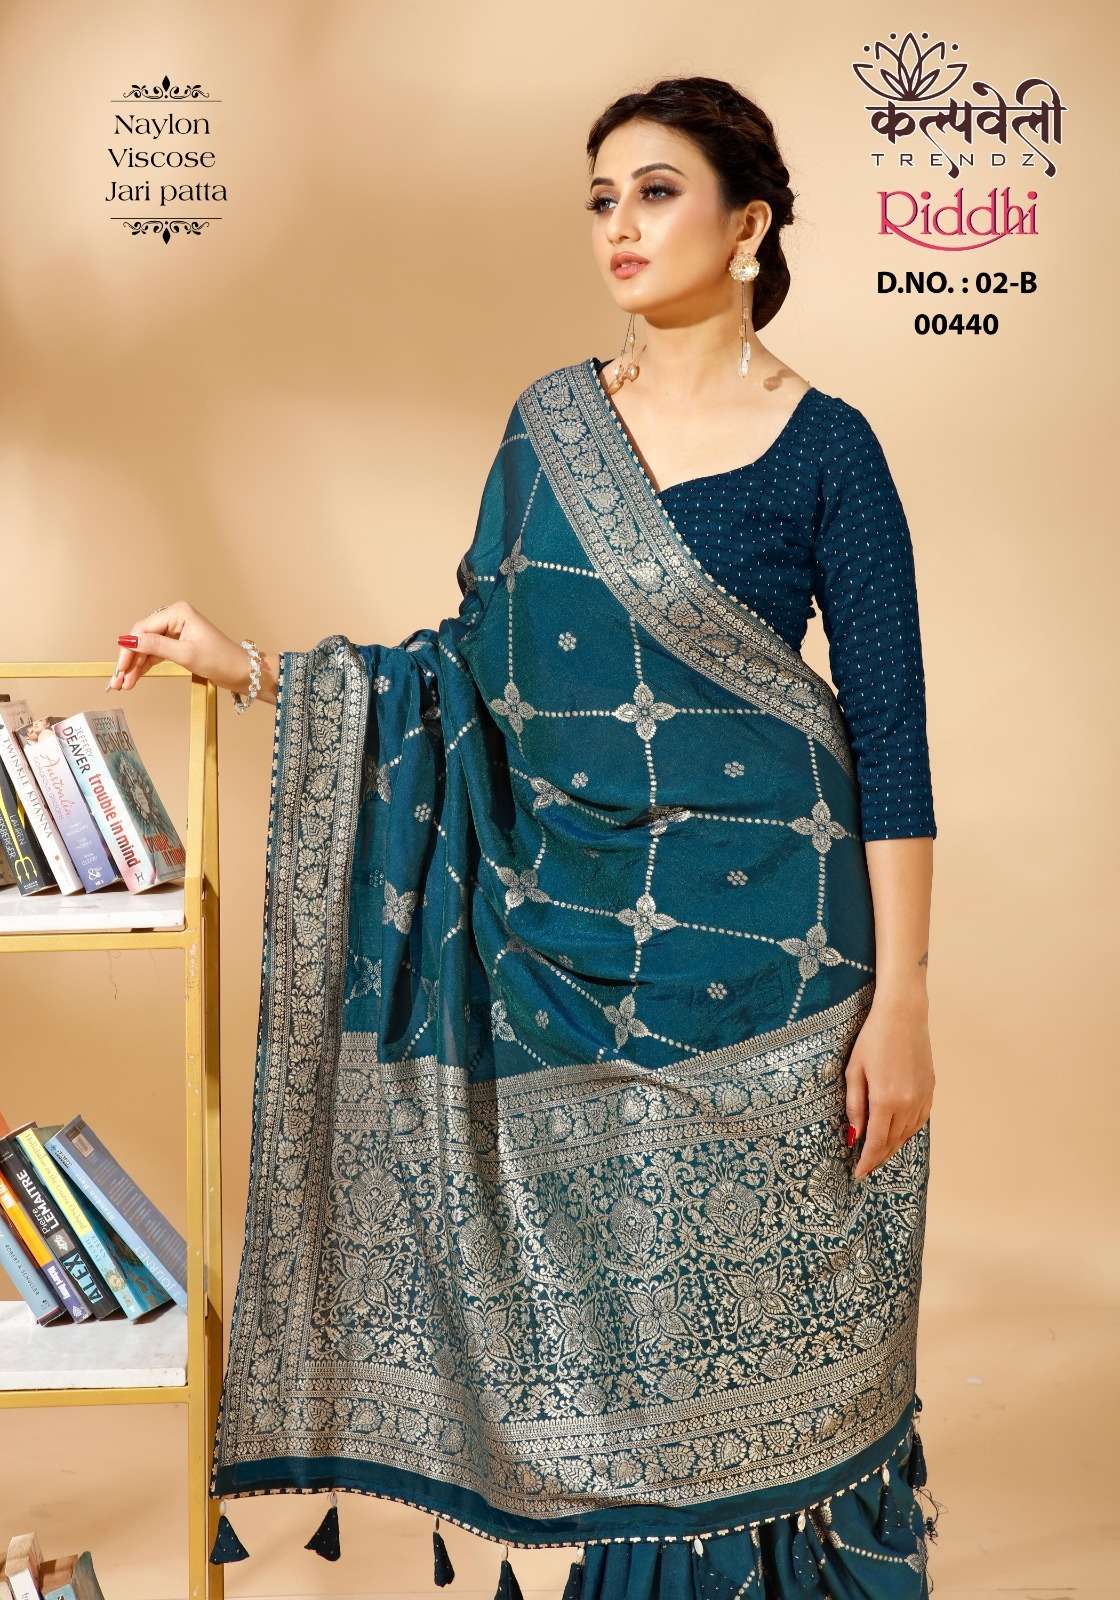 kalpavelly trendz present riddhi 2 viscose saree with matching blouse